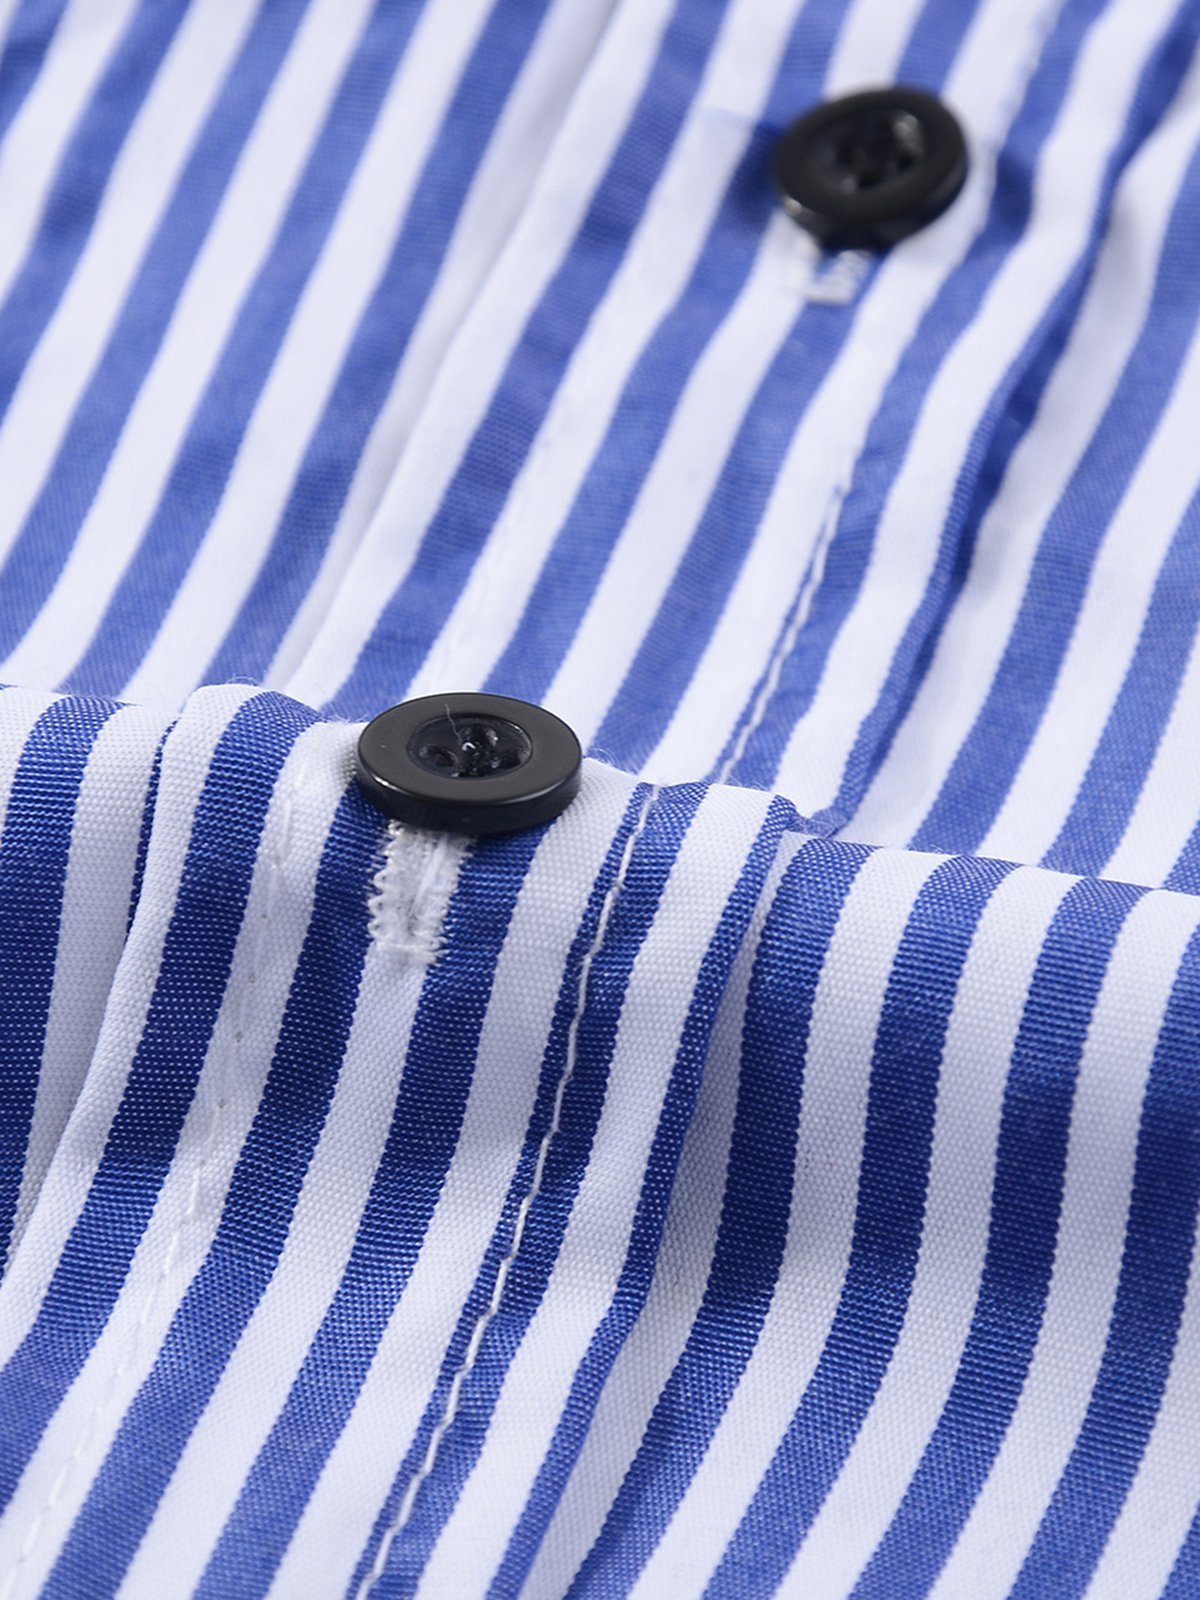 Shift Casual Striped Long Sleeve Blouse&shirt